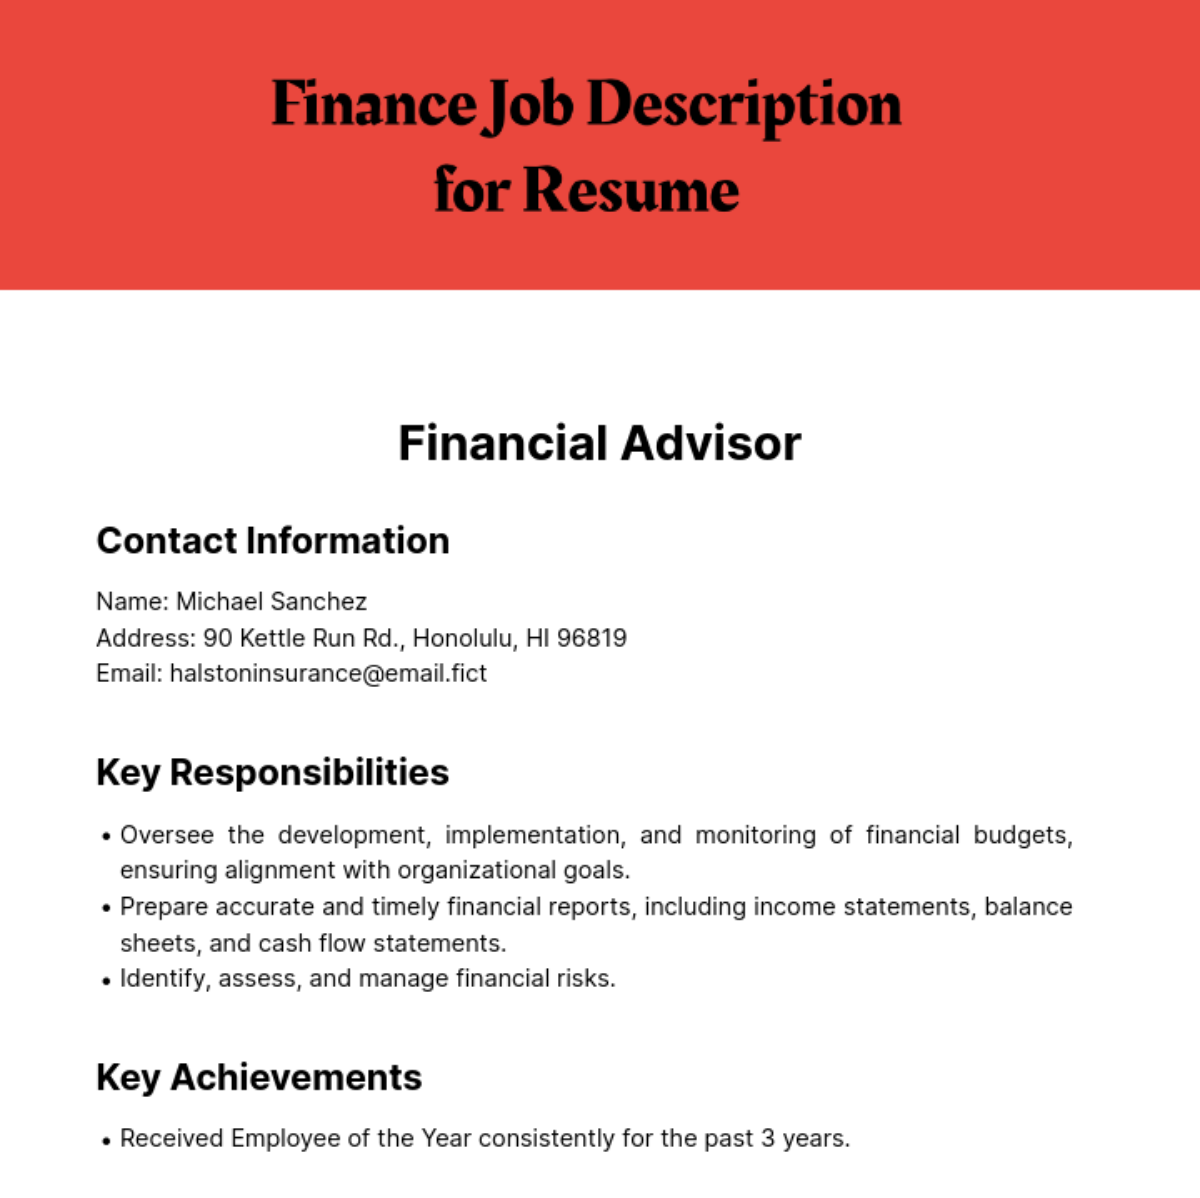 Finance Job Description for Resume Template